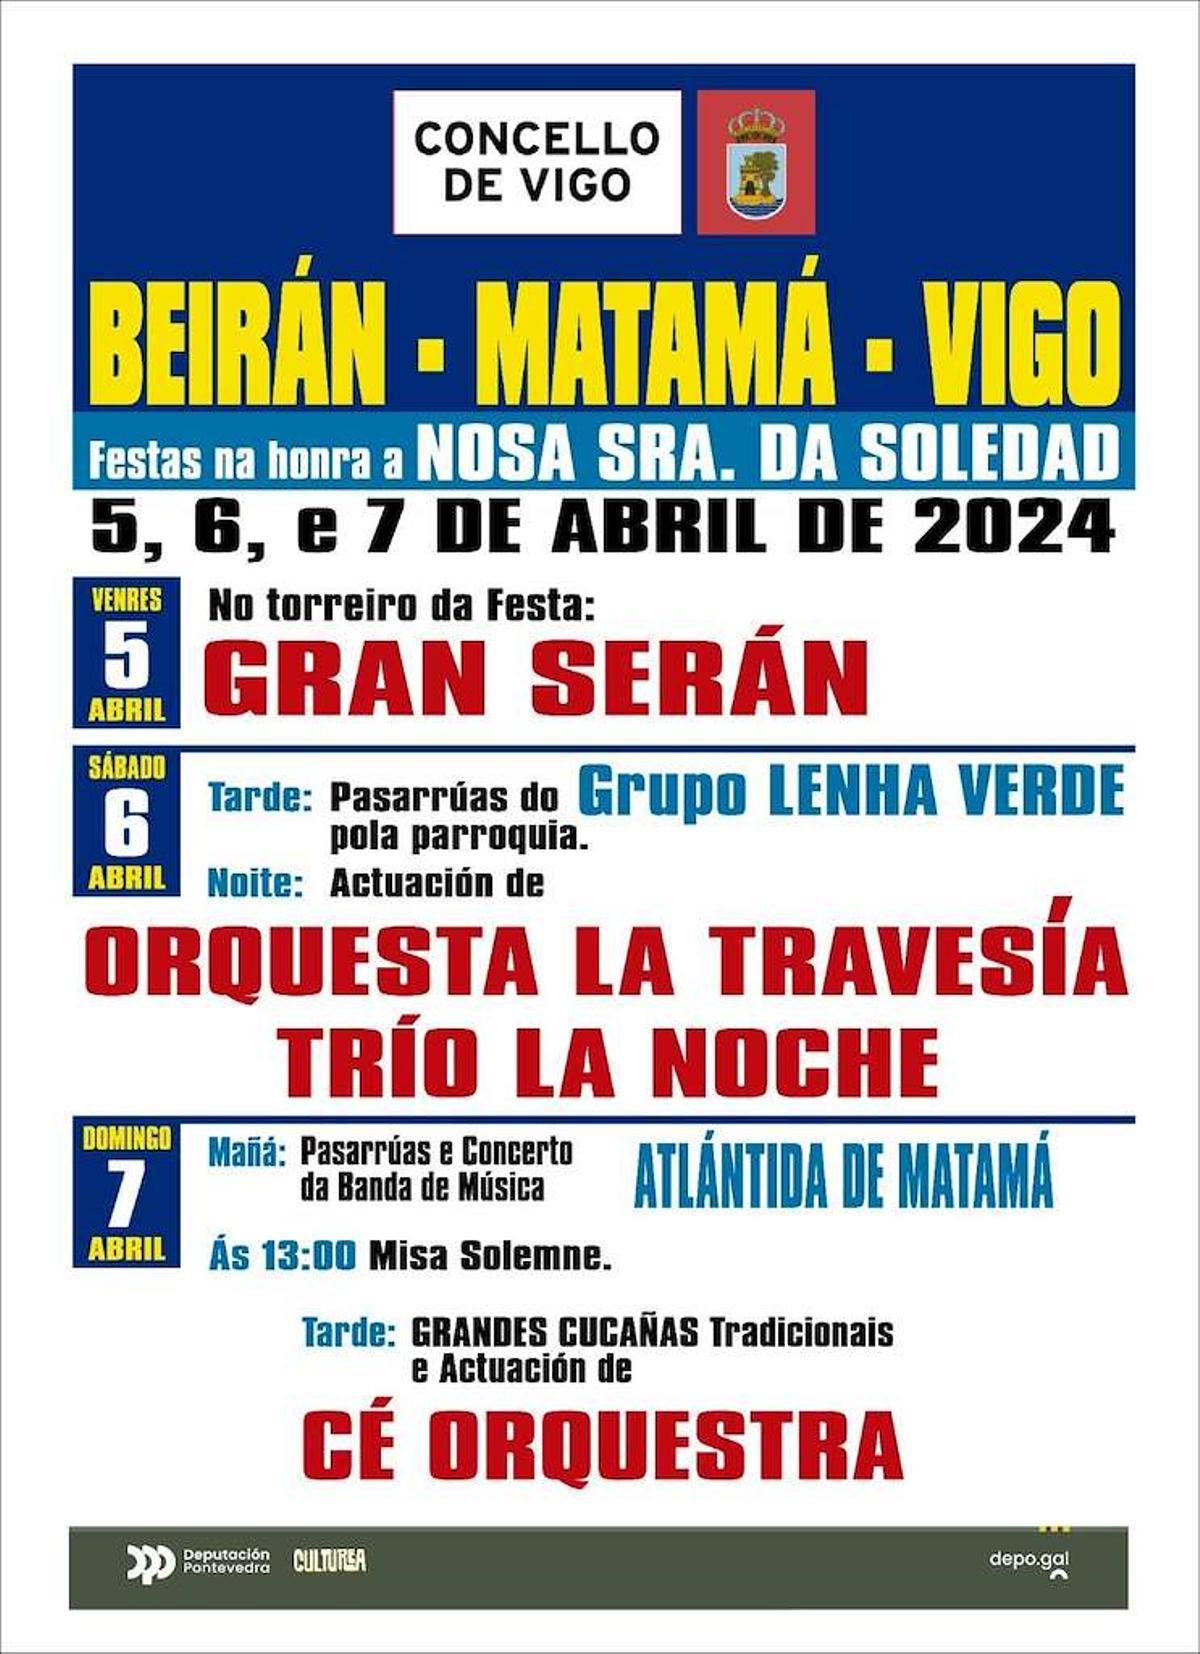 Cartel con la programación de los tres días de fiesta en Beirán (Matamá).